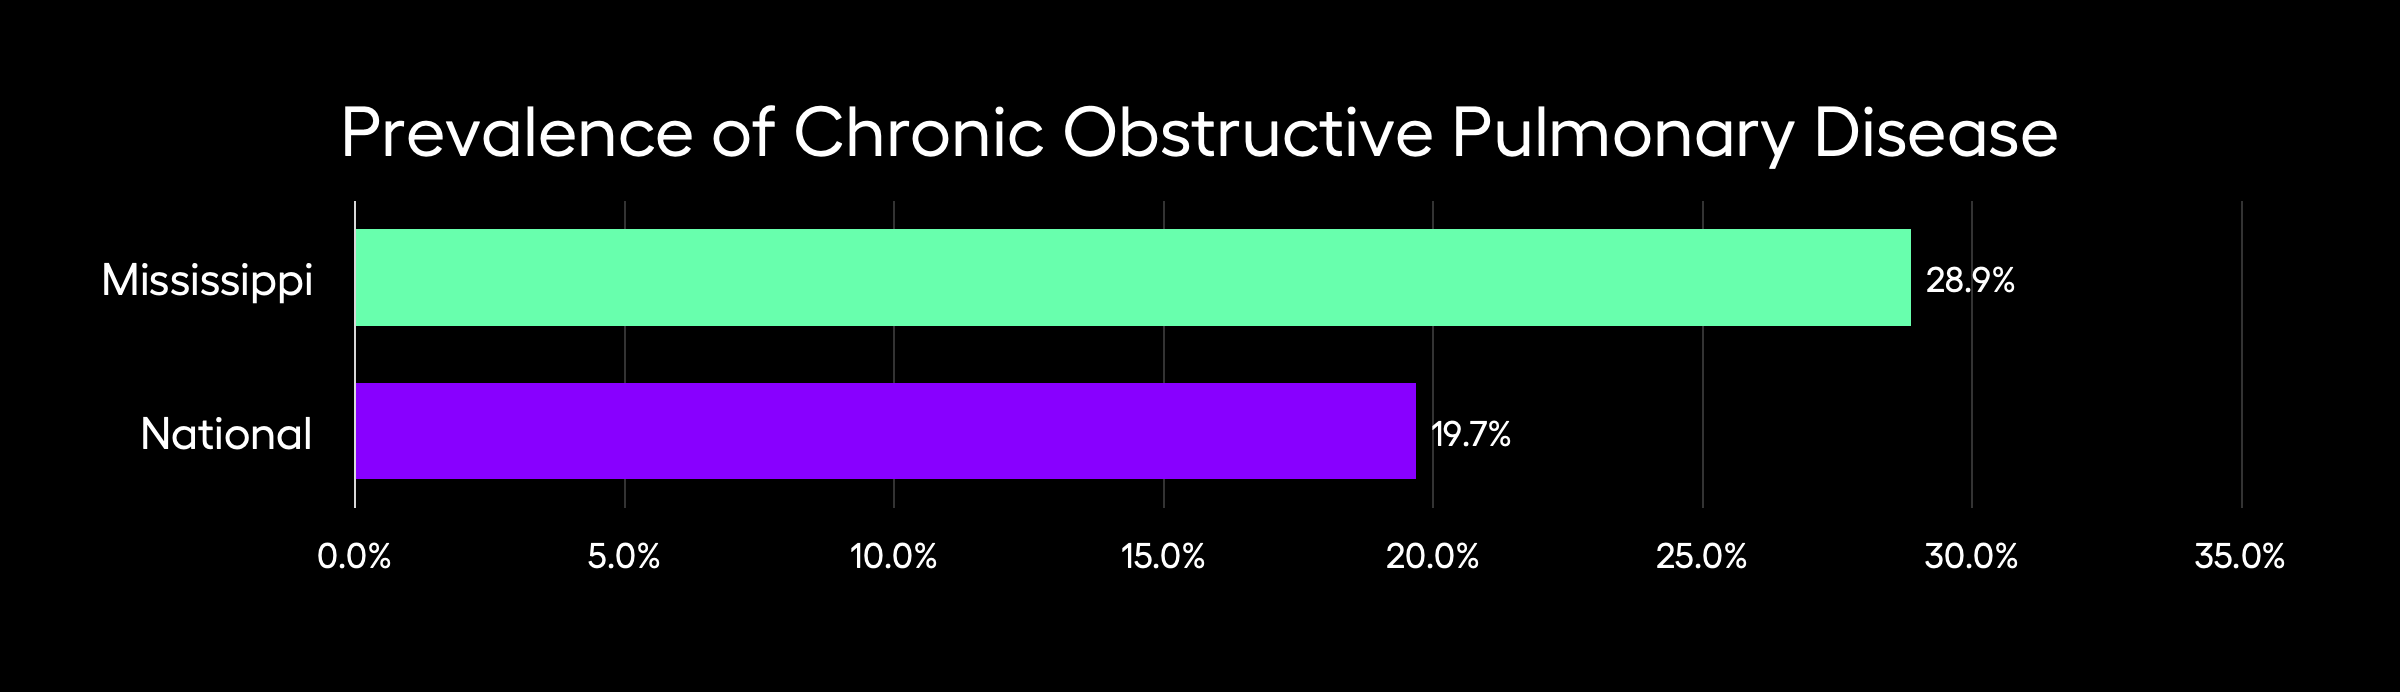 Prevalence of Chronic Obstructive Pulmonary Disease across the U.S.